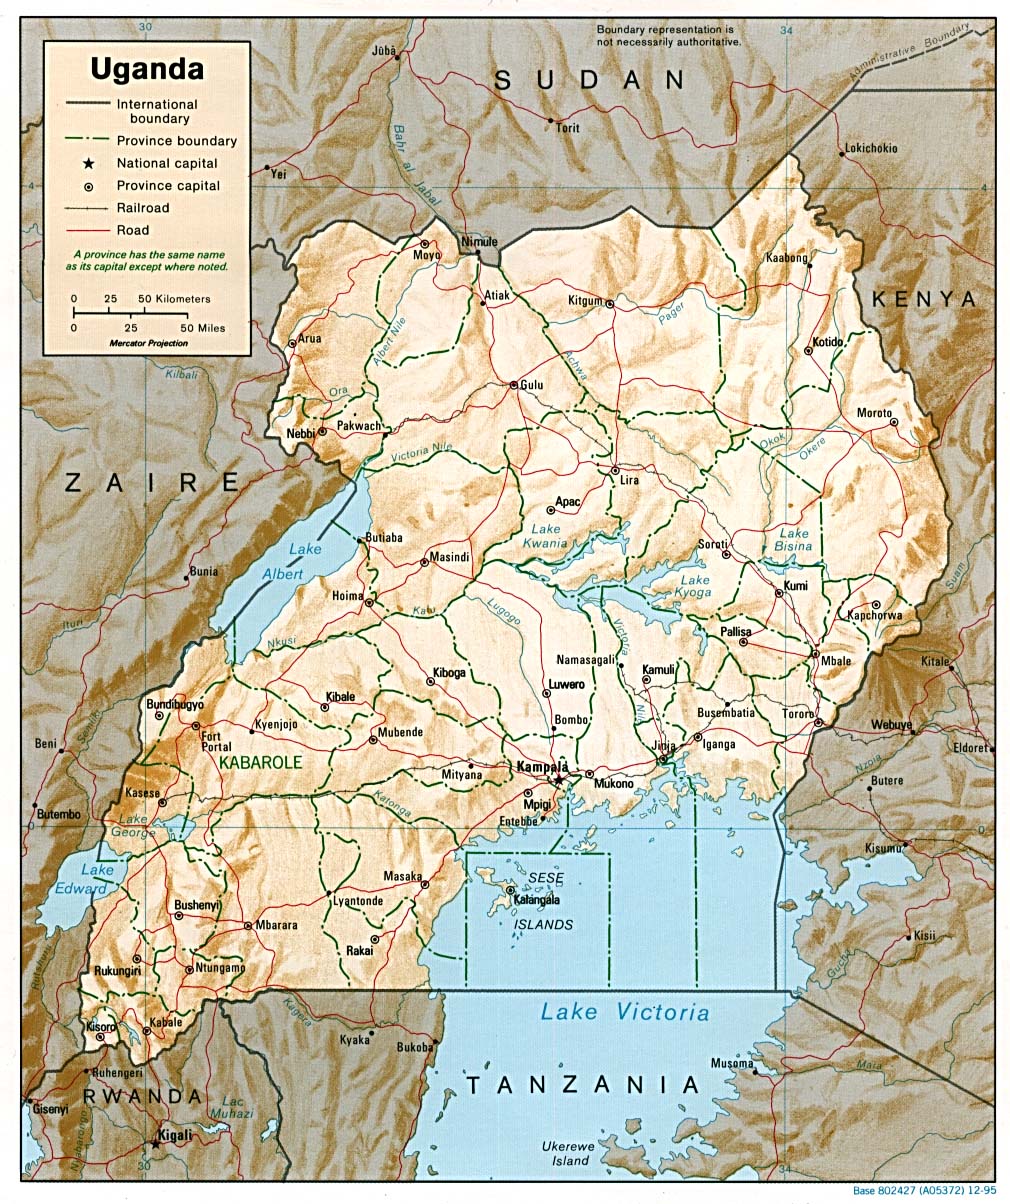 Ouganda - relief • Map • PopulationData.net